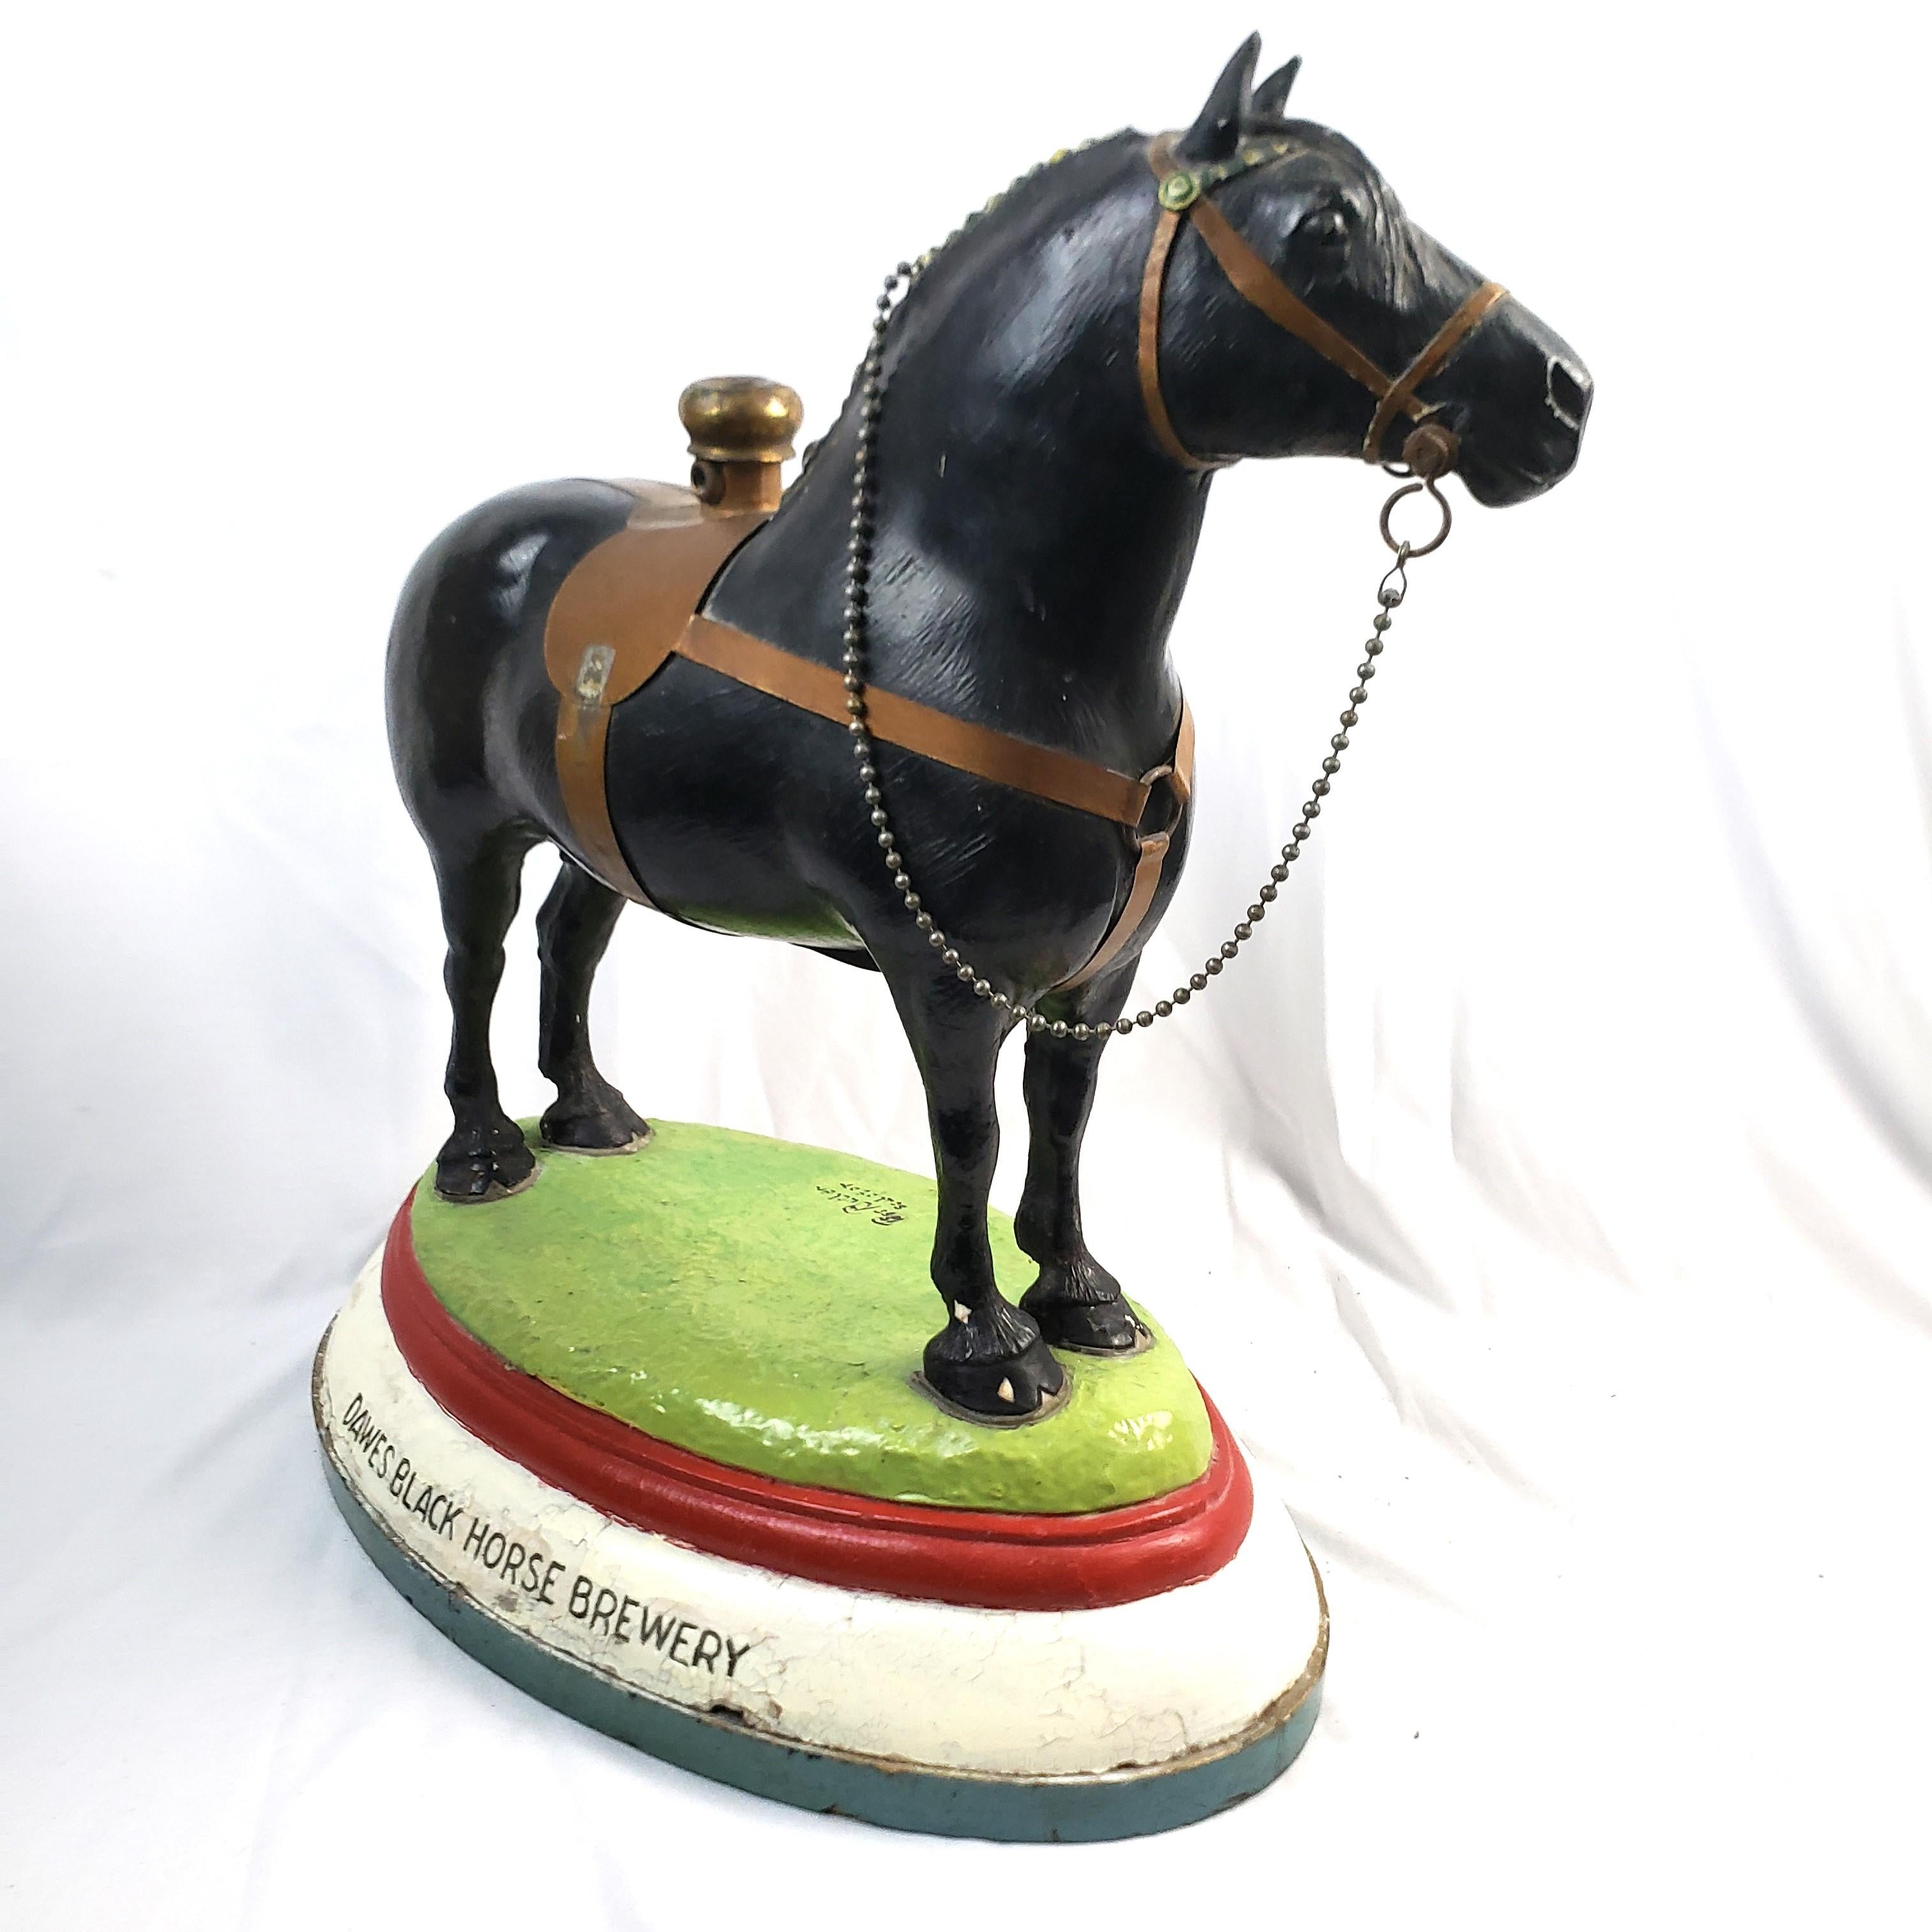 Dawes Black Horse Brewery Large Cast Advertising Horse Sculptural Lamp Base For Sale 5